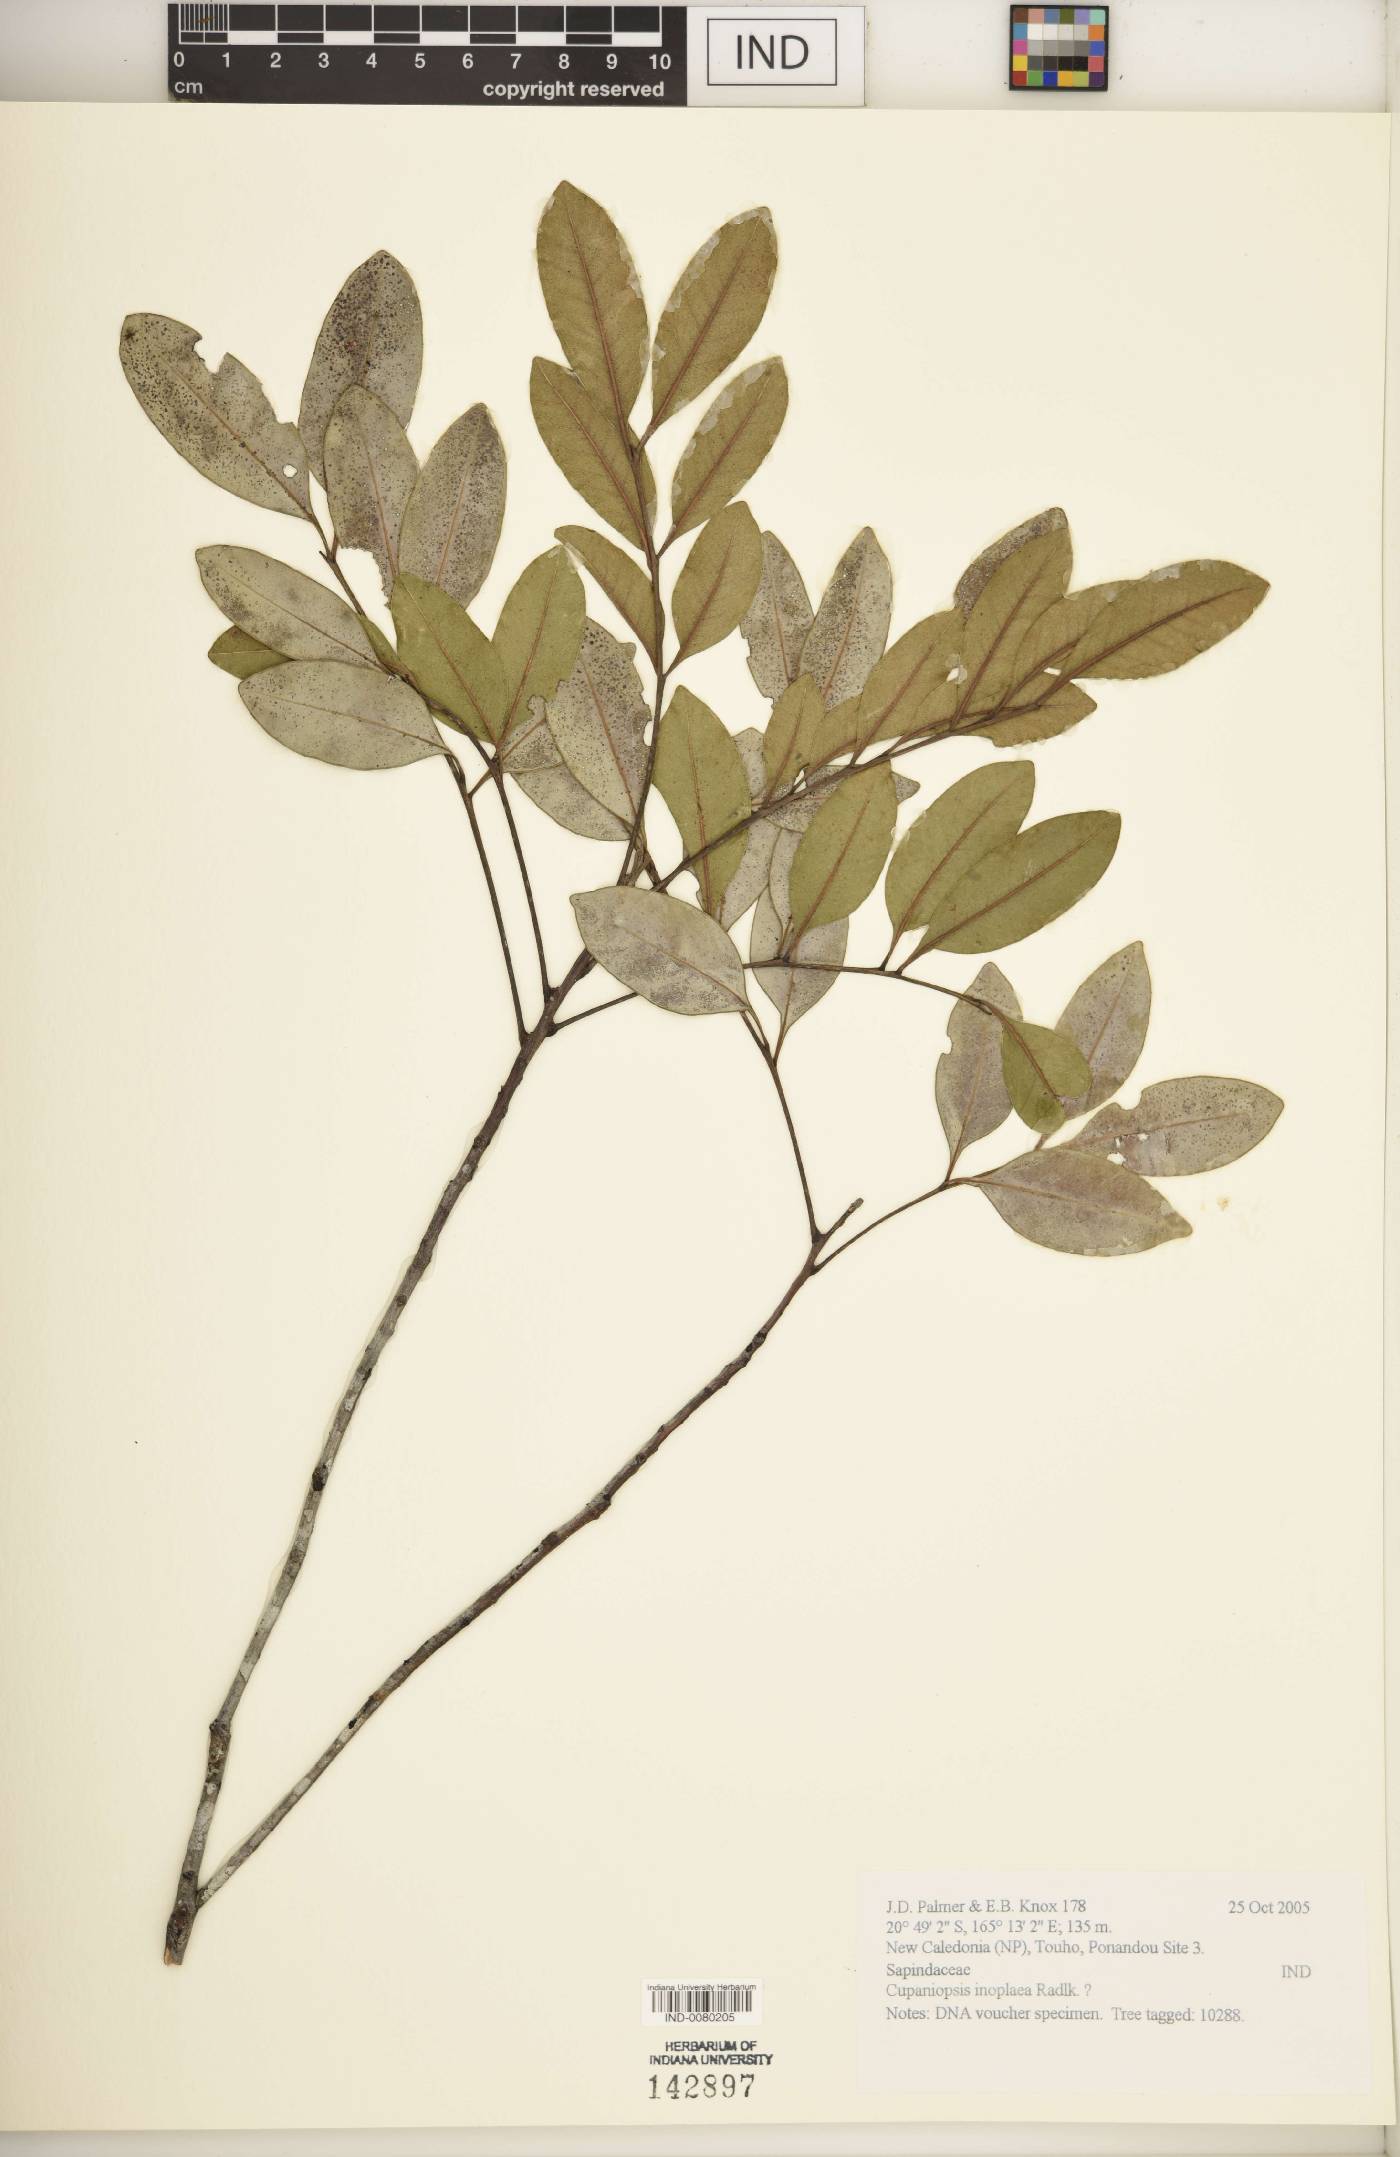 Cupaniopsis image